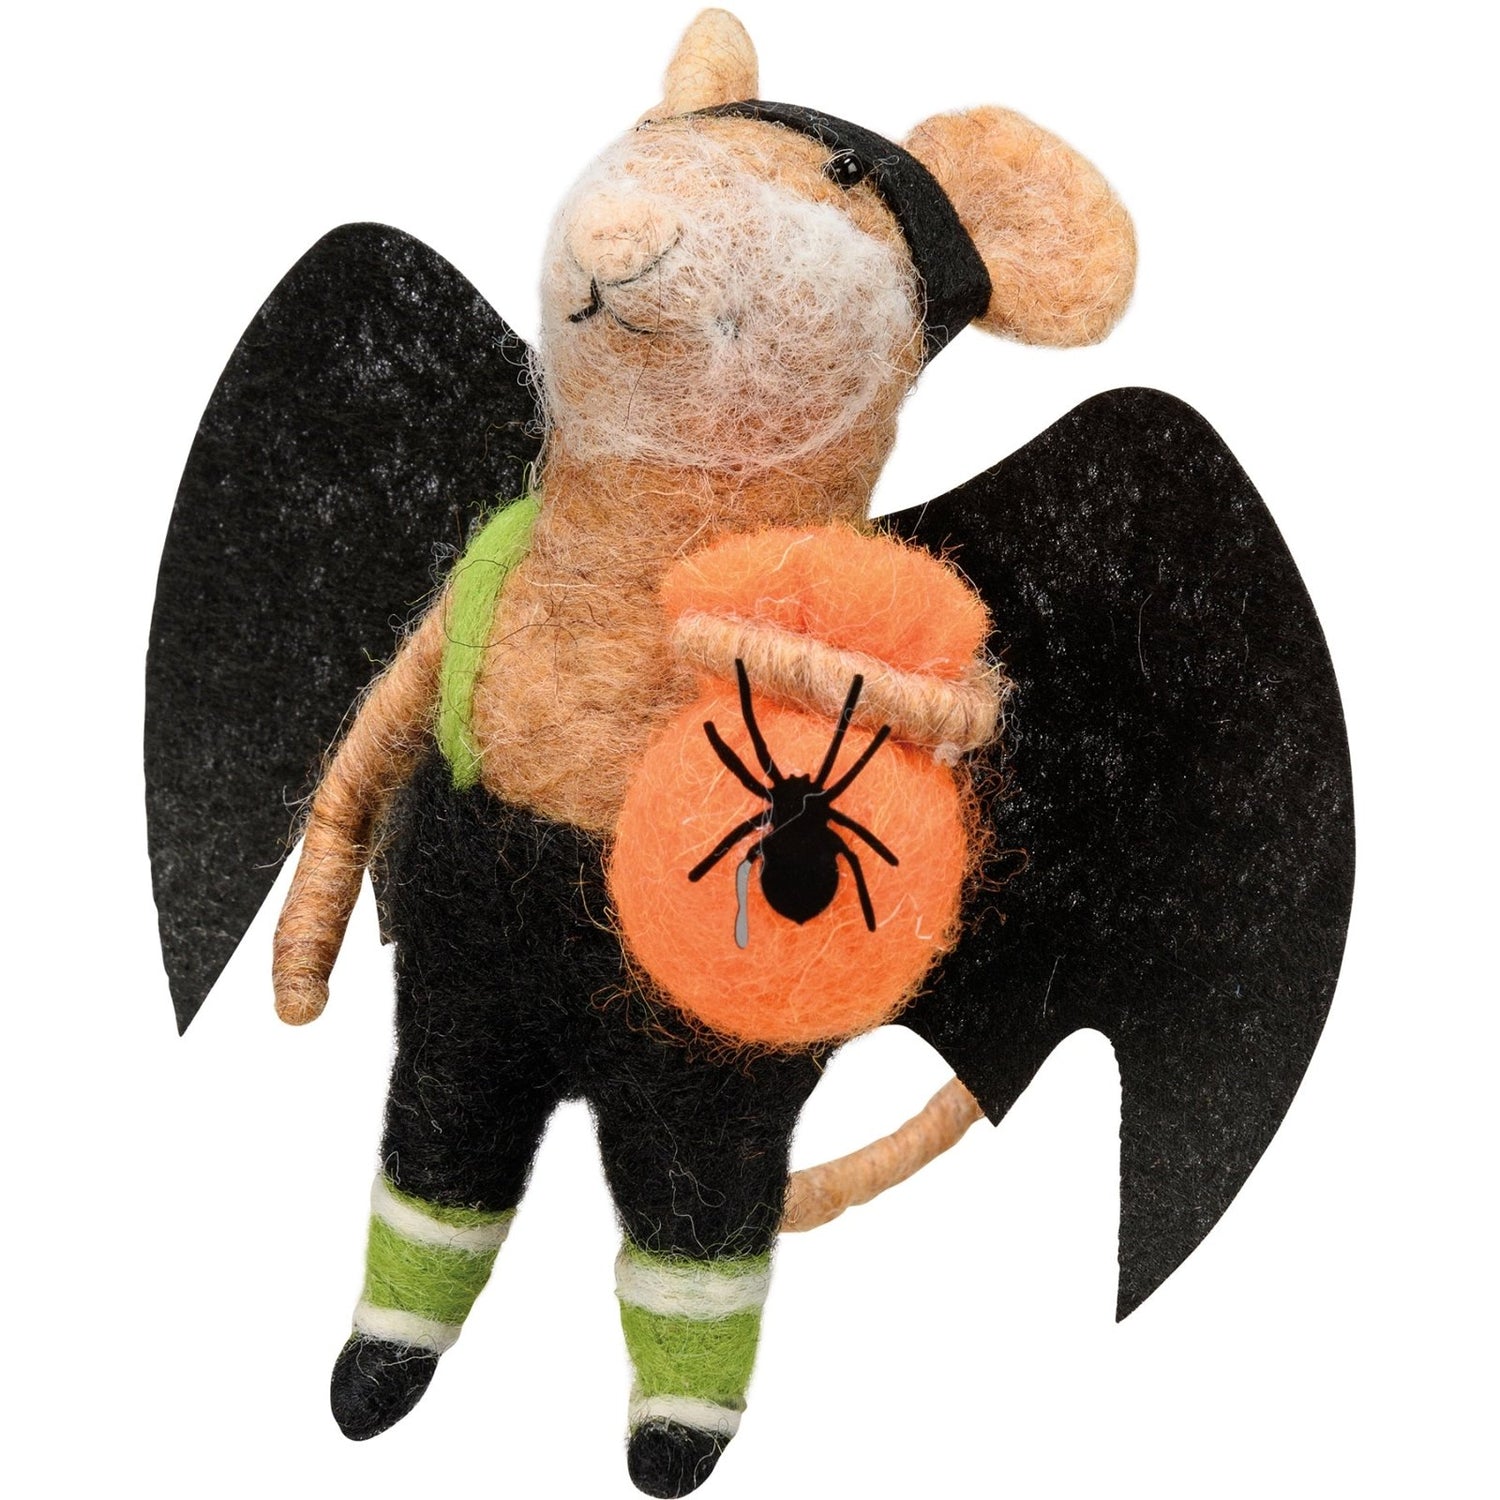 Primitive/Country Halloween Felt Bat Mouse w/ Spider ornament - The Primitive Pineapple Collection